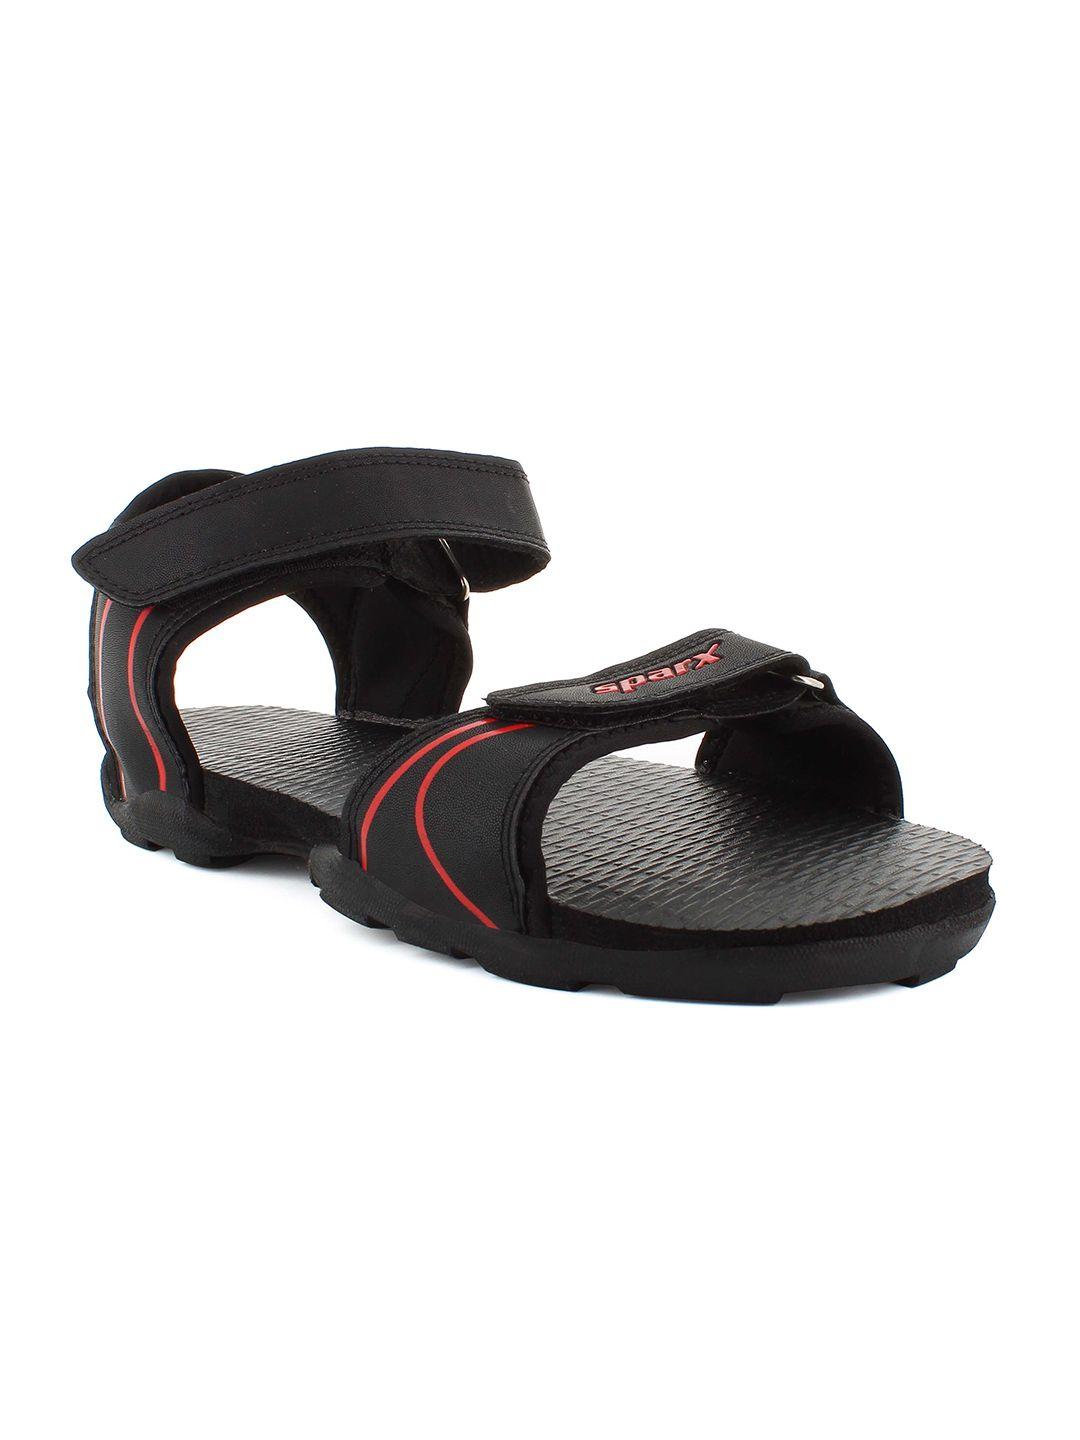 sparx-men-textured-sports-sandals-with-velcro-closure